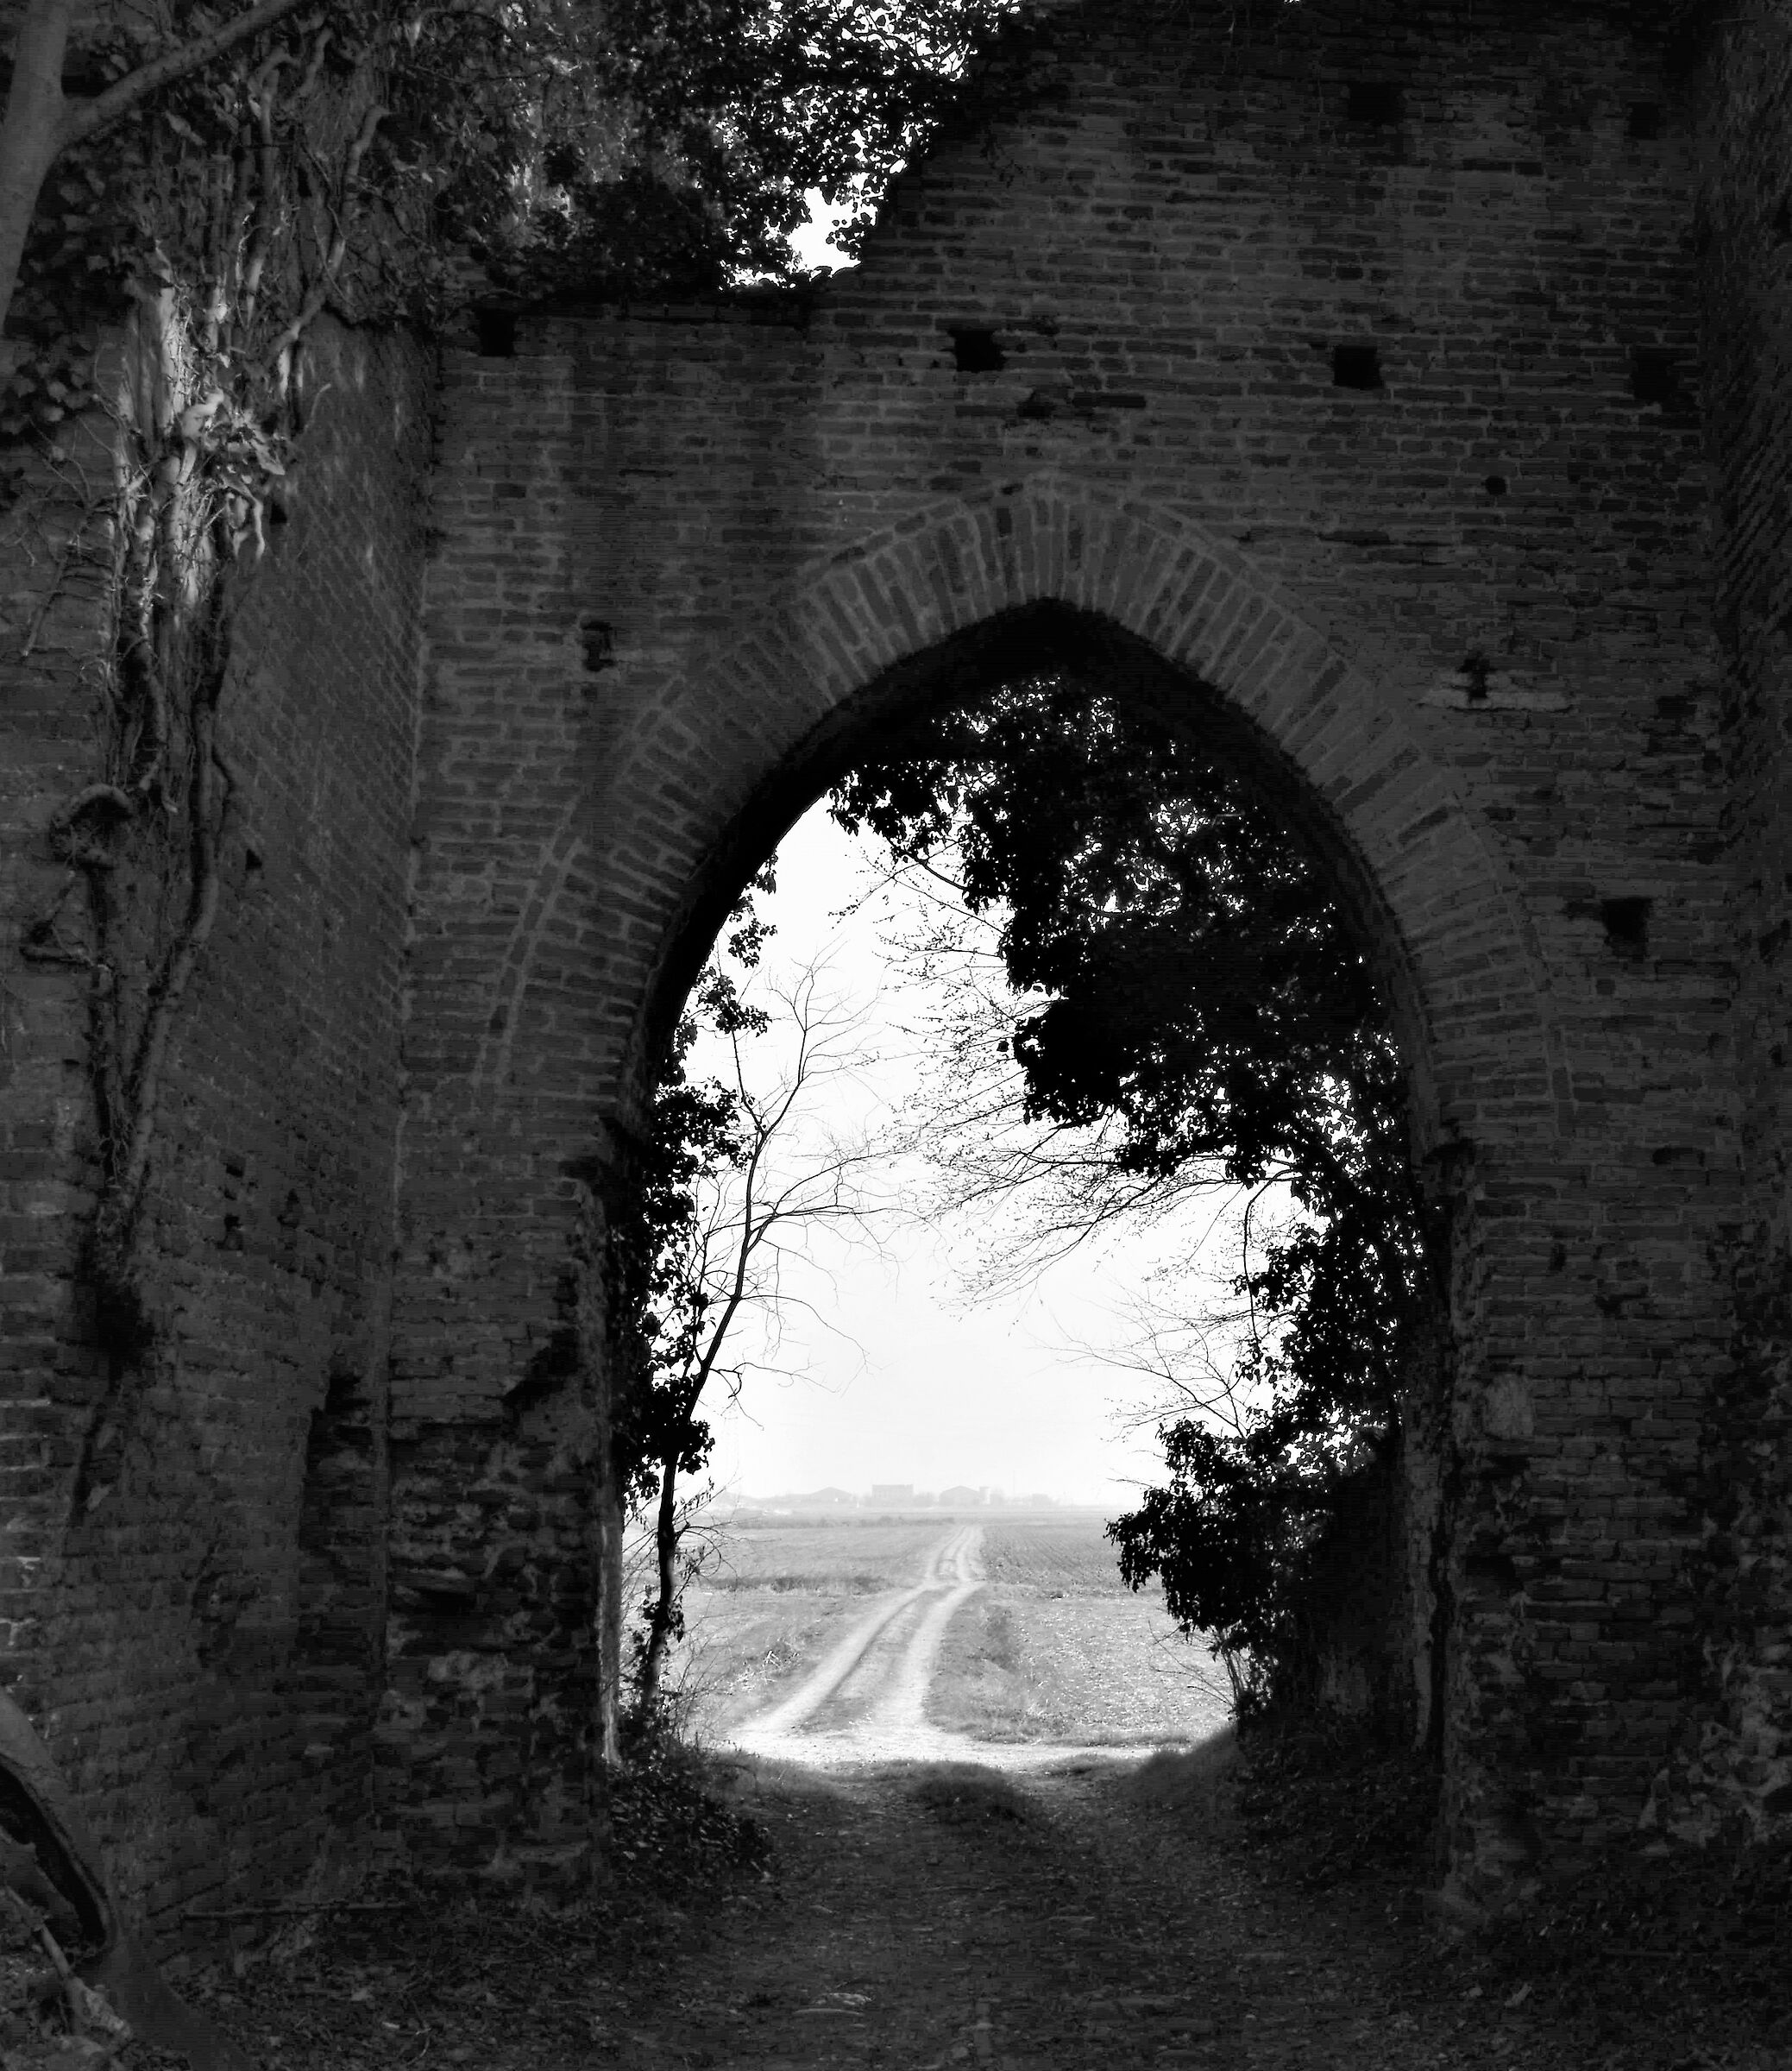 But that portal of the Castle.... Marcondirodirondo '........